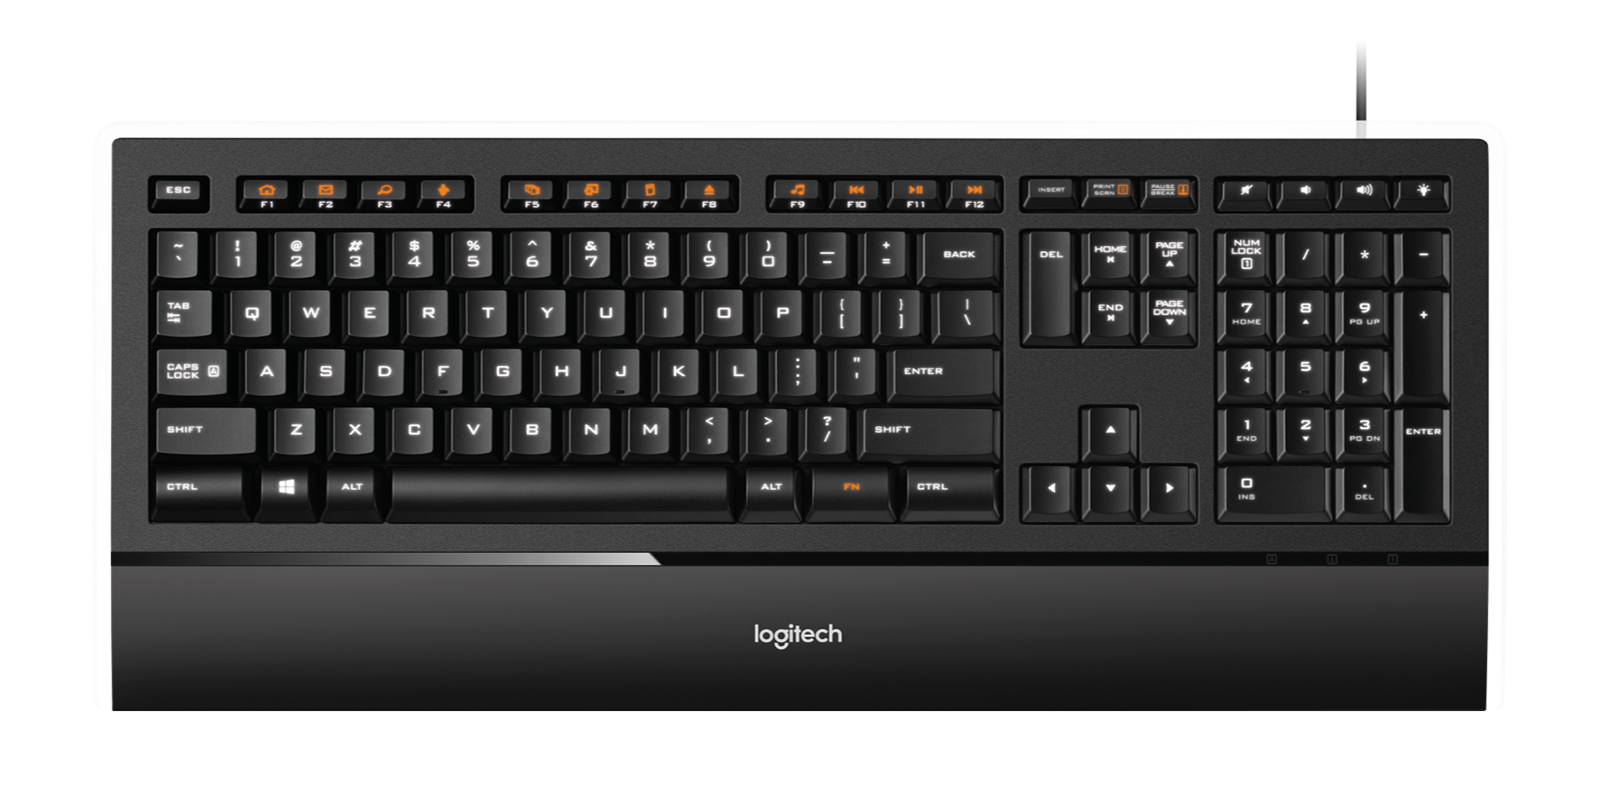 Mono congestión Saturar Logitech K740 Illuminated Keyboard with Built-in Palm Rest